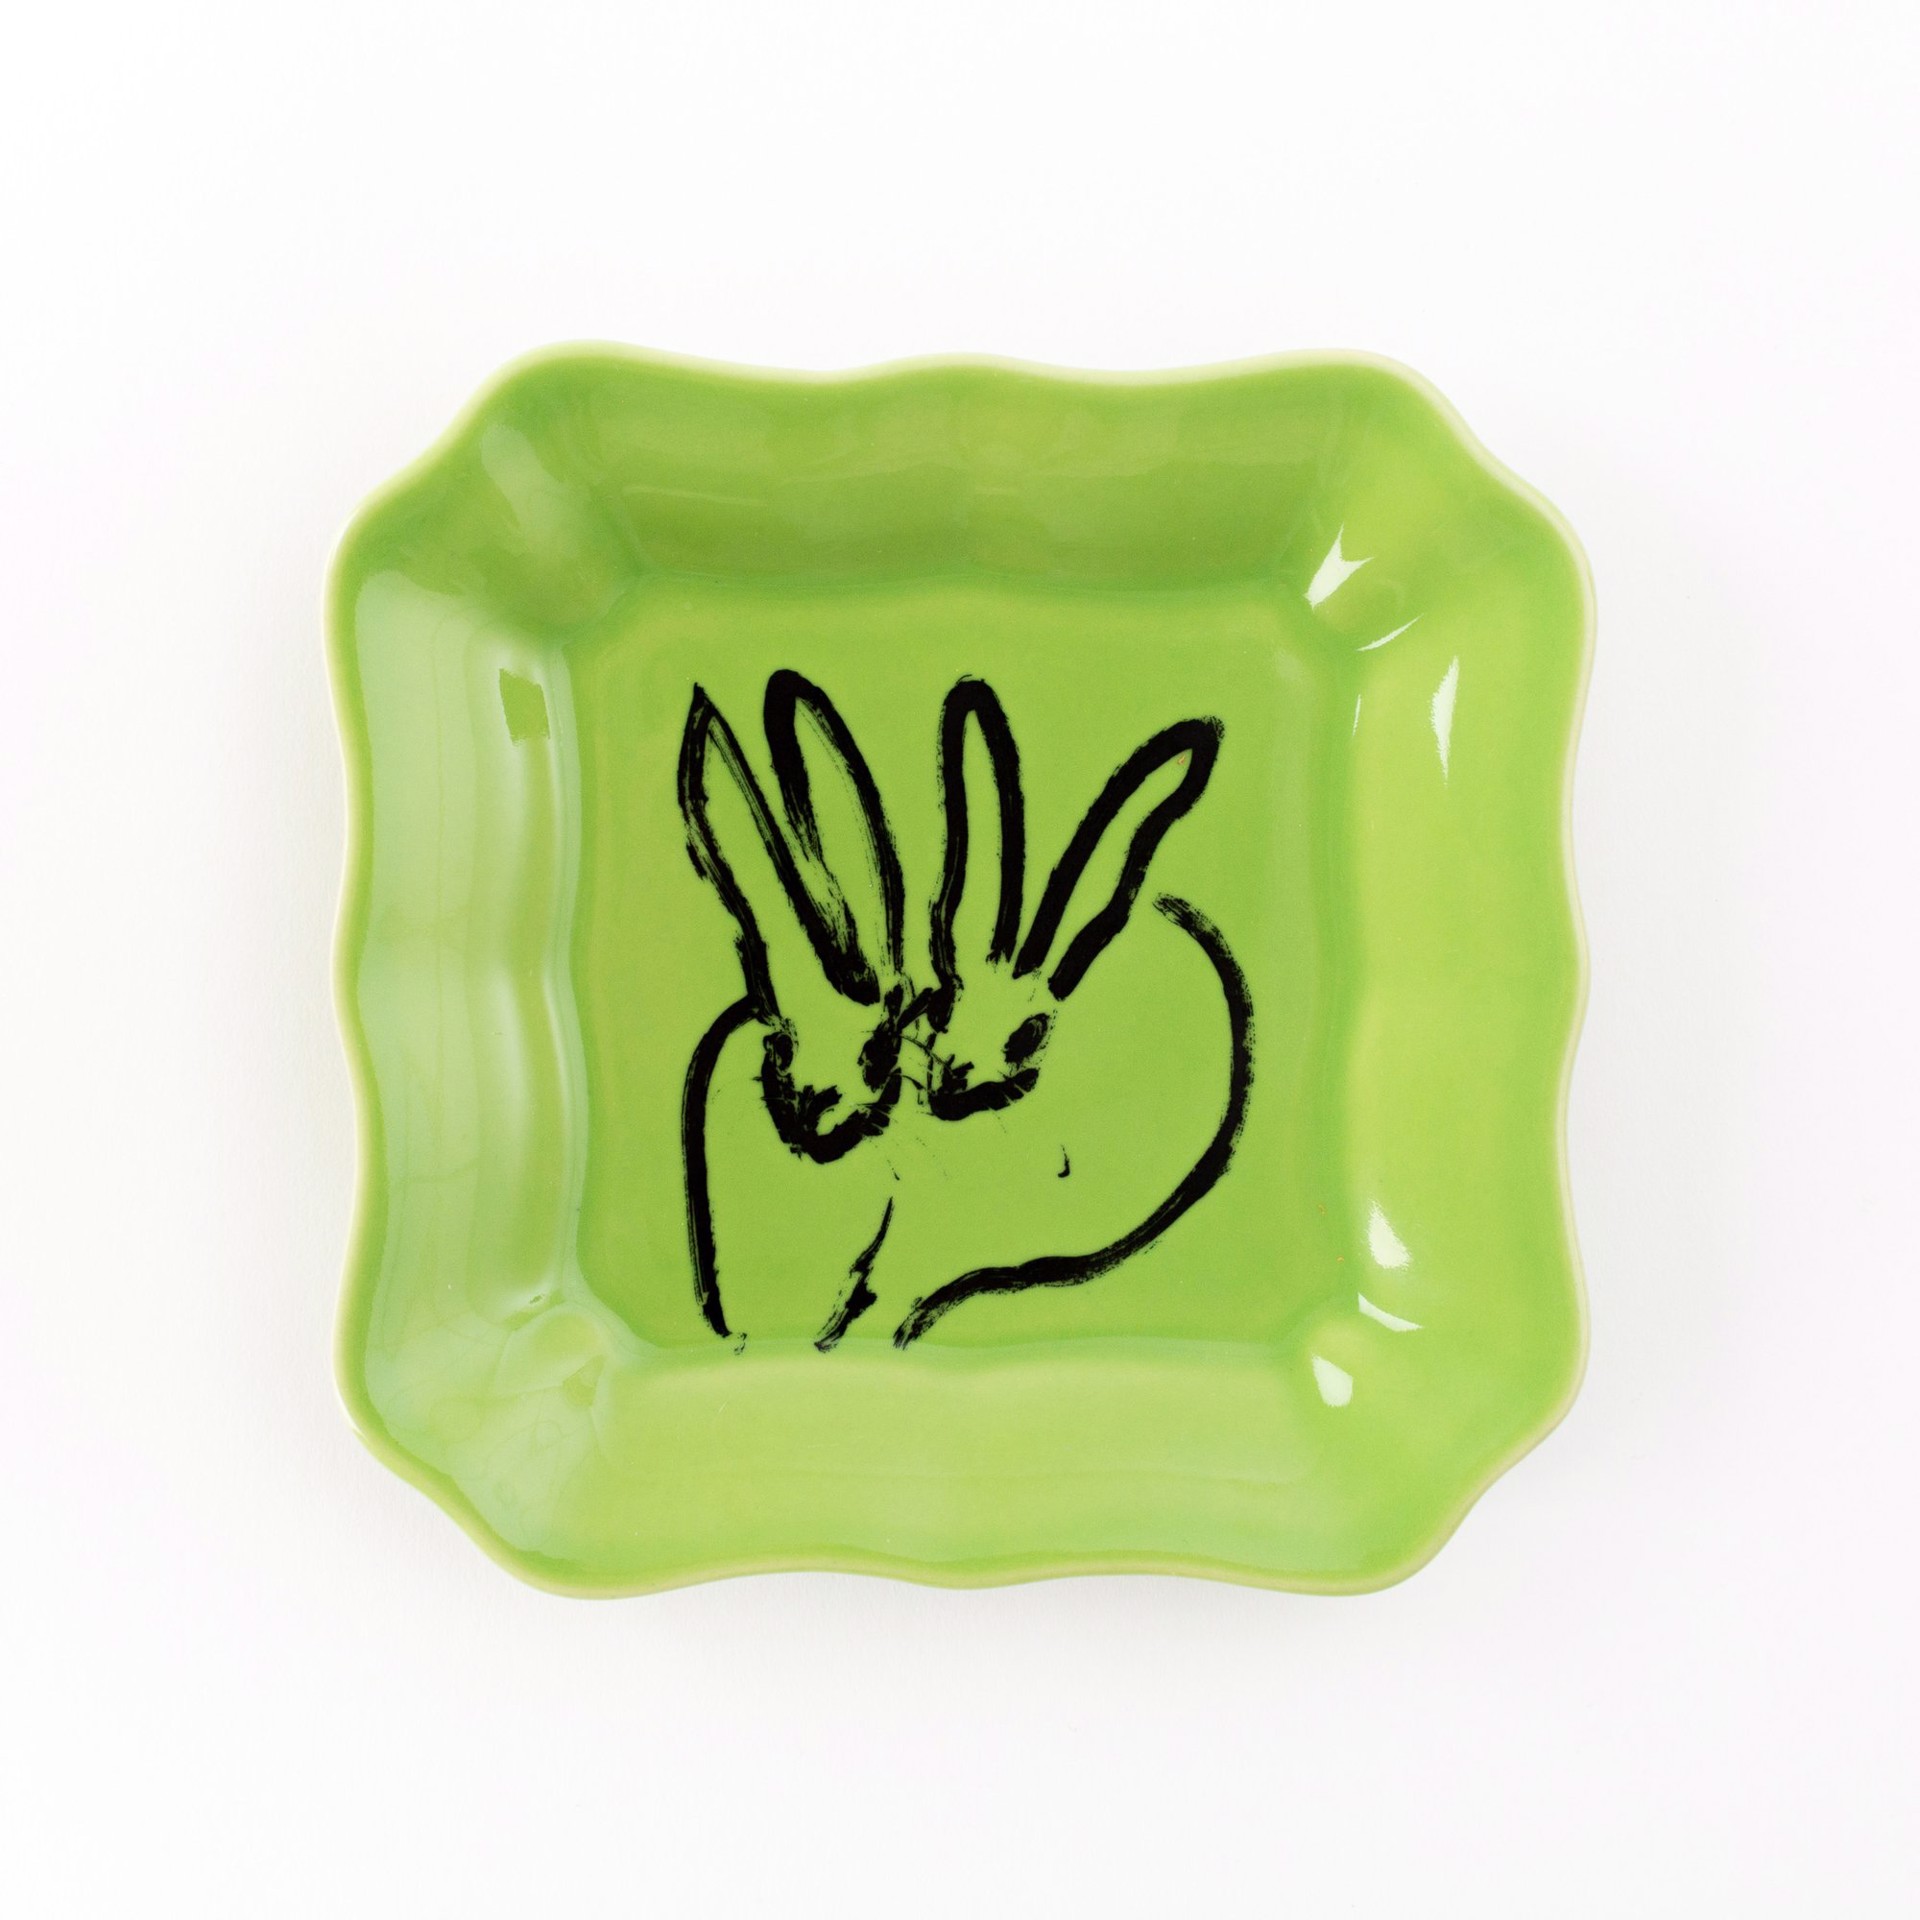 Bunny Portrait Plate - Green by Hunt Slonem (Hop Up Shop)